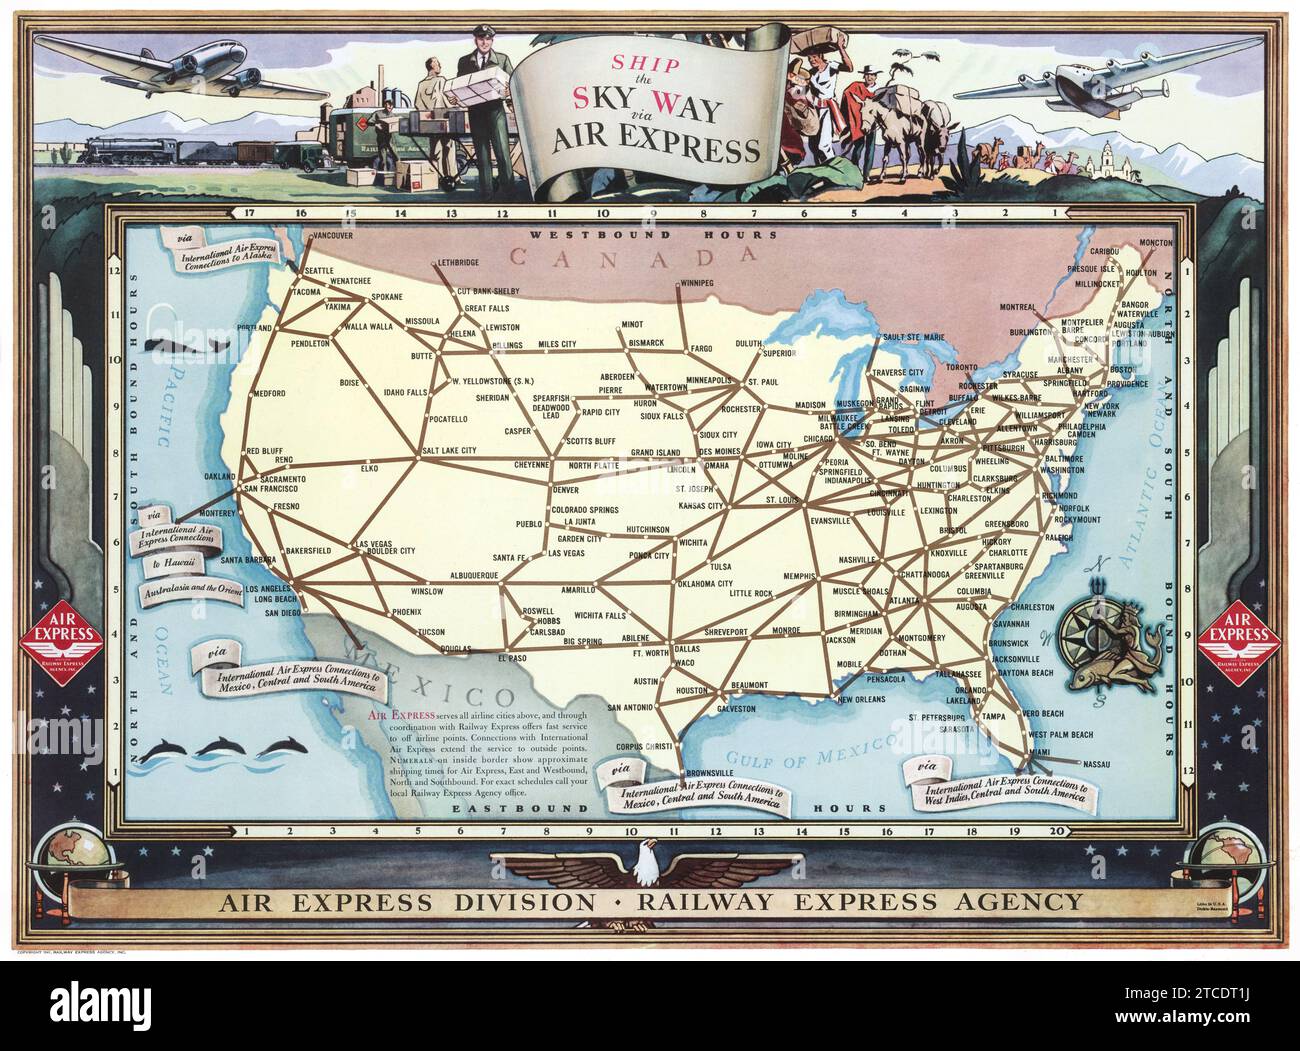 amerikanisches Vintage-Reiseposter - Railway Express Agency Inc Air Express Division, 1941 - illustrierte Karte von Amerika Stockfoto